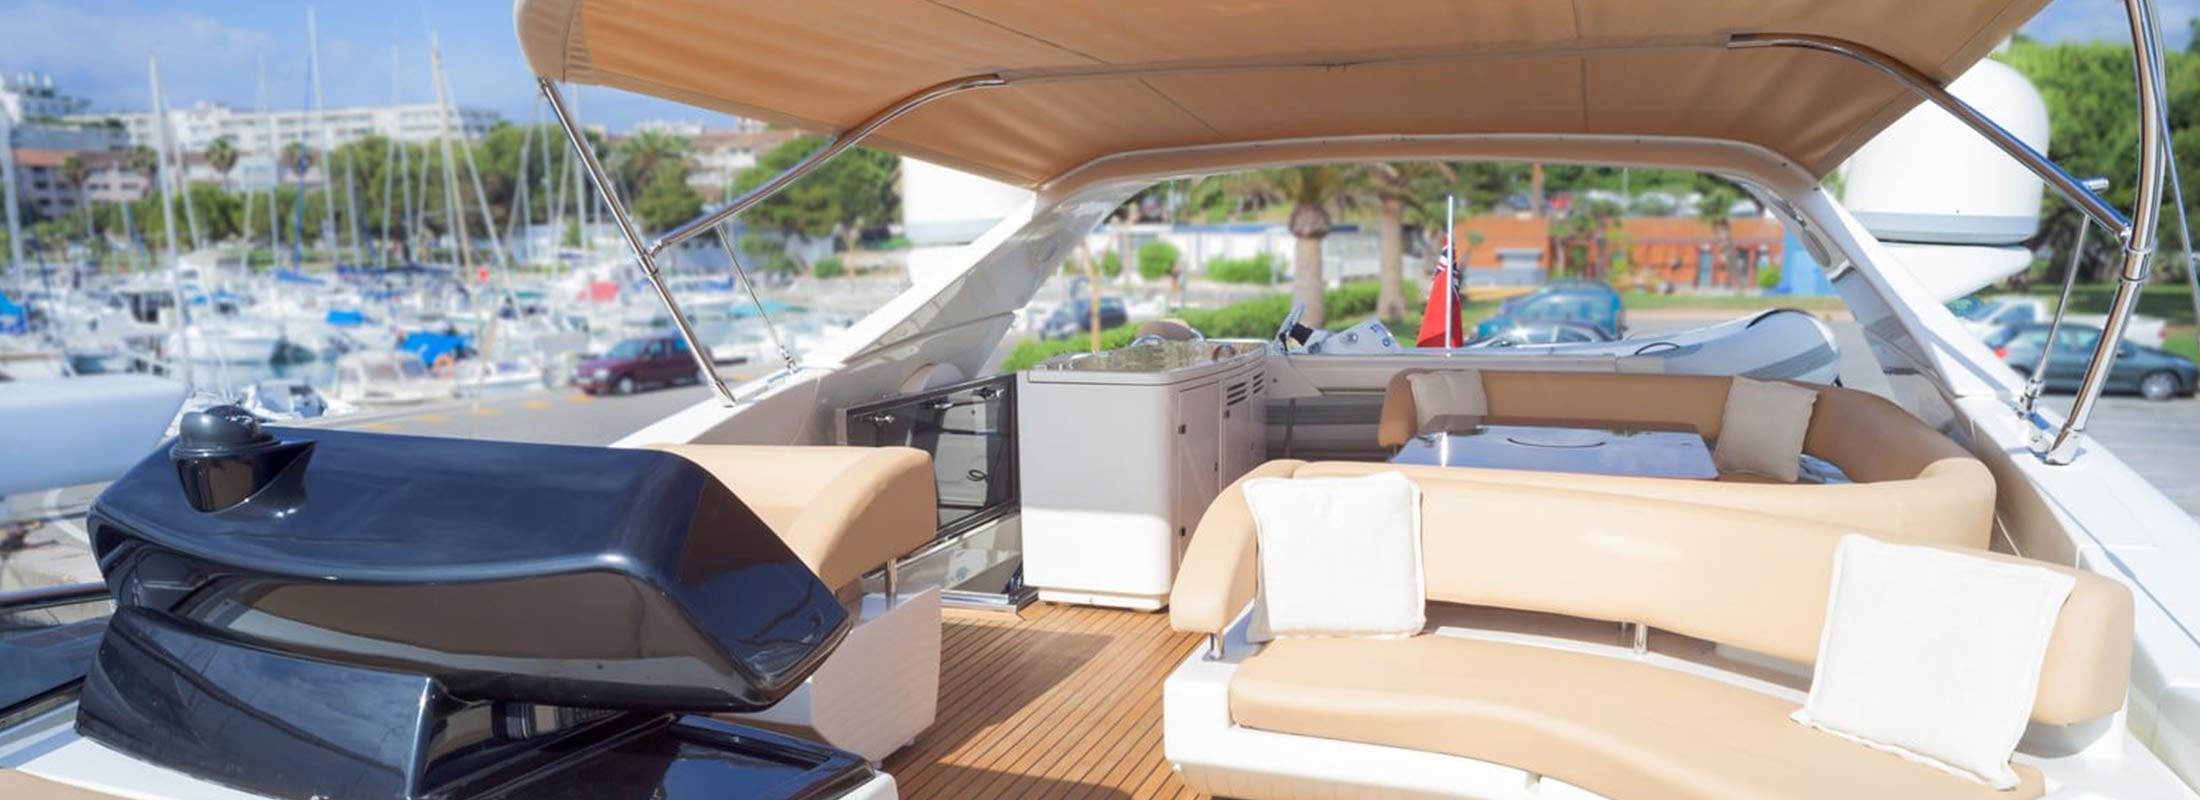 Dolce Mia Motor Yacht for Charter Mediterranean slider 2